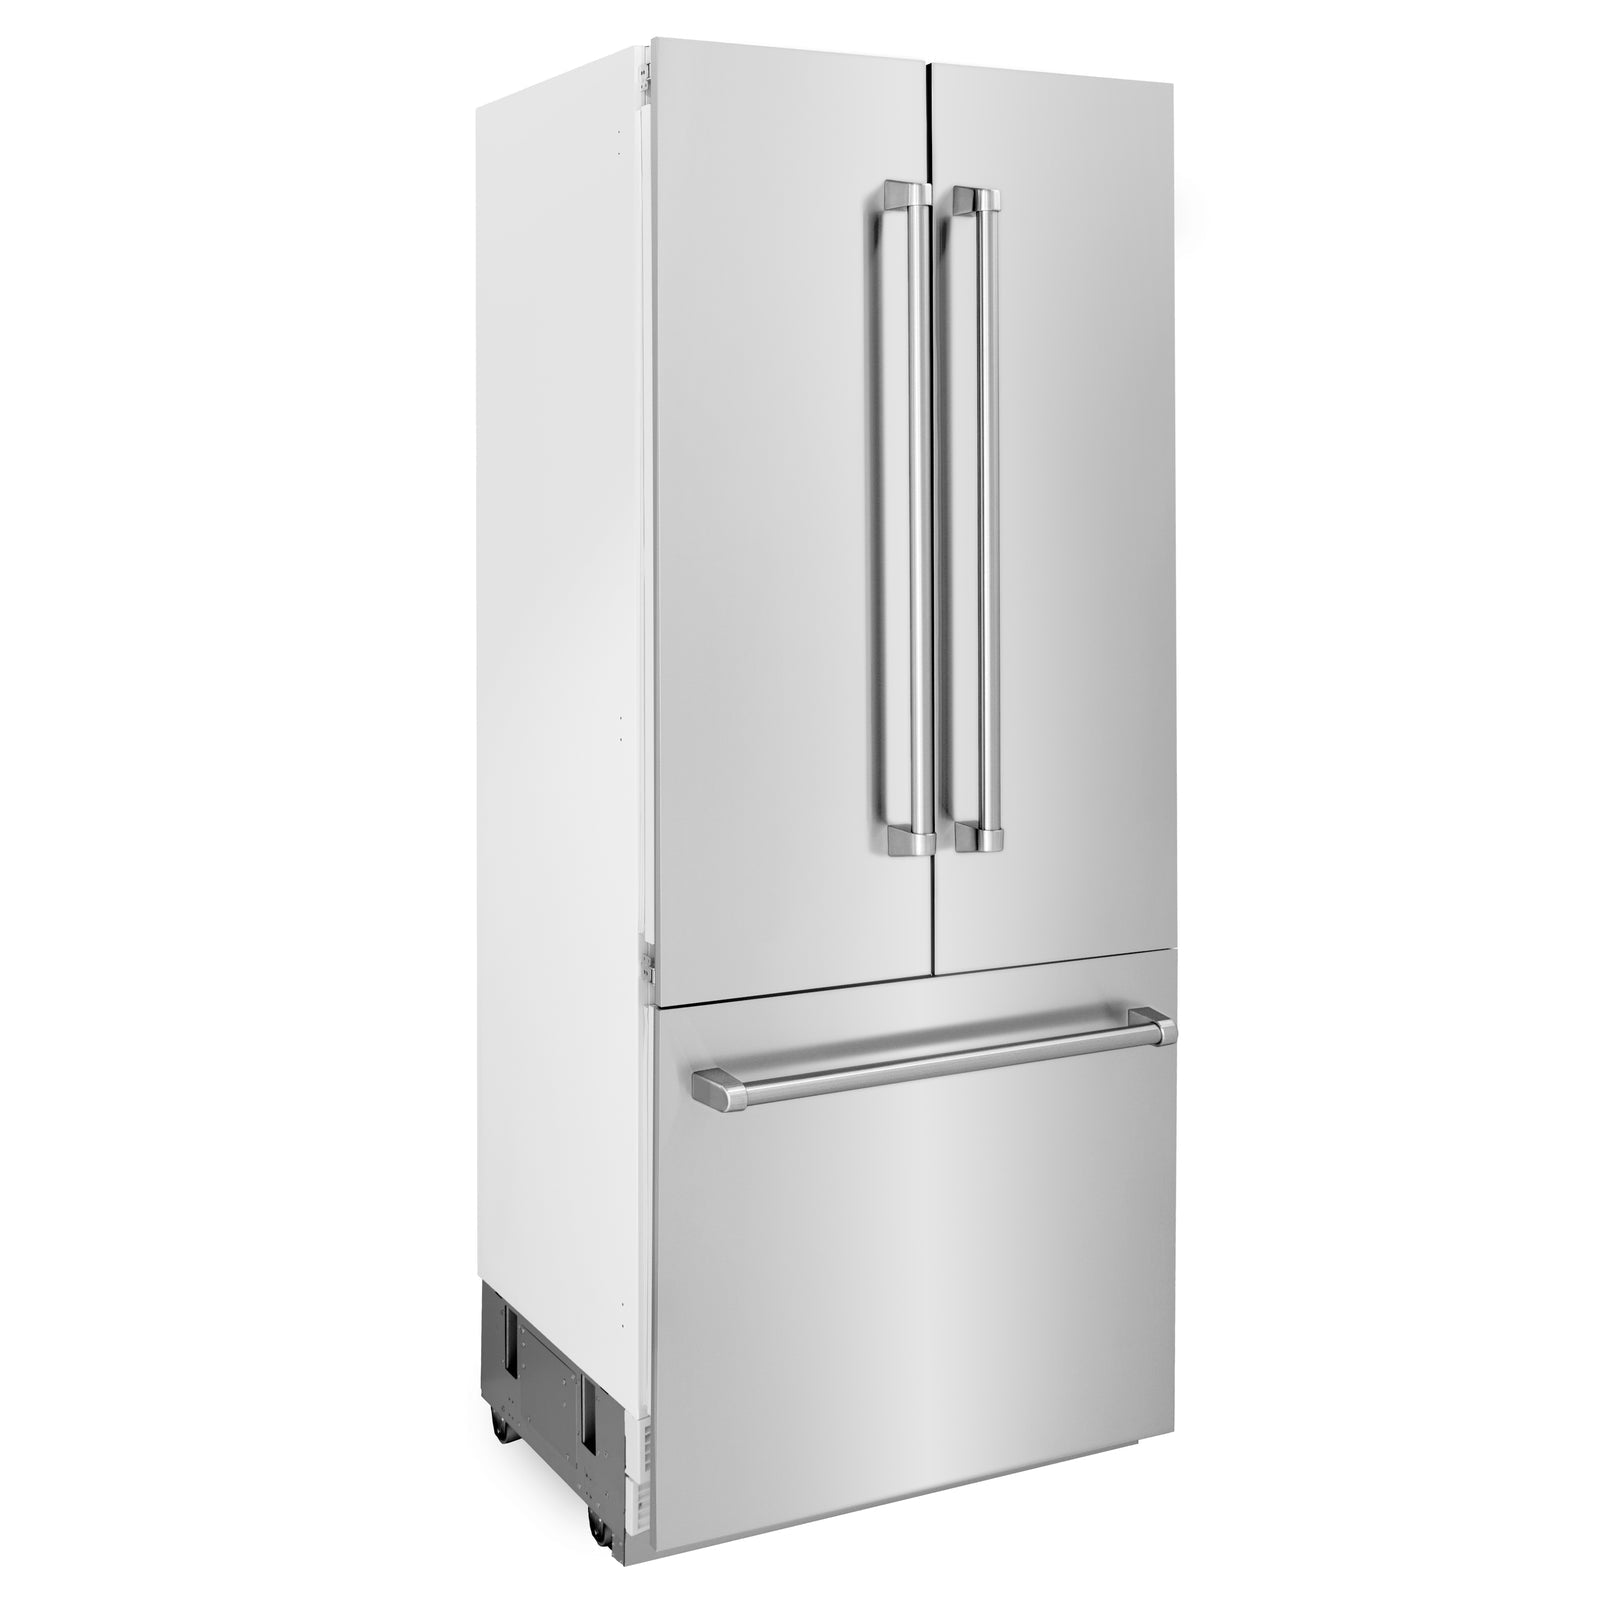 ZLINE 36 In. 19.6 cu. ft. Built-In 3-Door French Door Refrigerator with Internal Water and Ice Dispenser in Stainless Steel, RBIV-304-36 - Smart Kitchen Lab